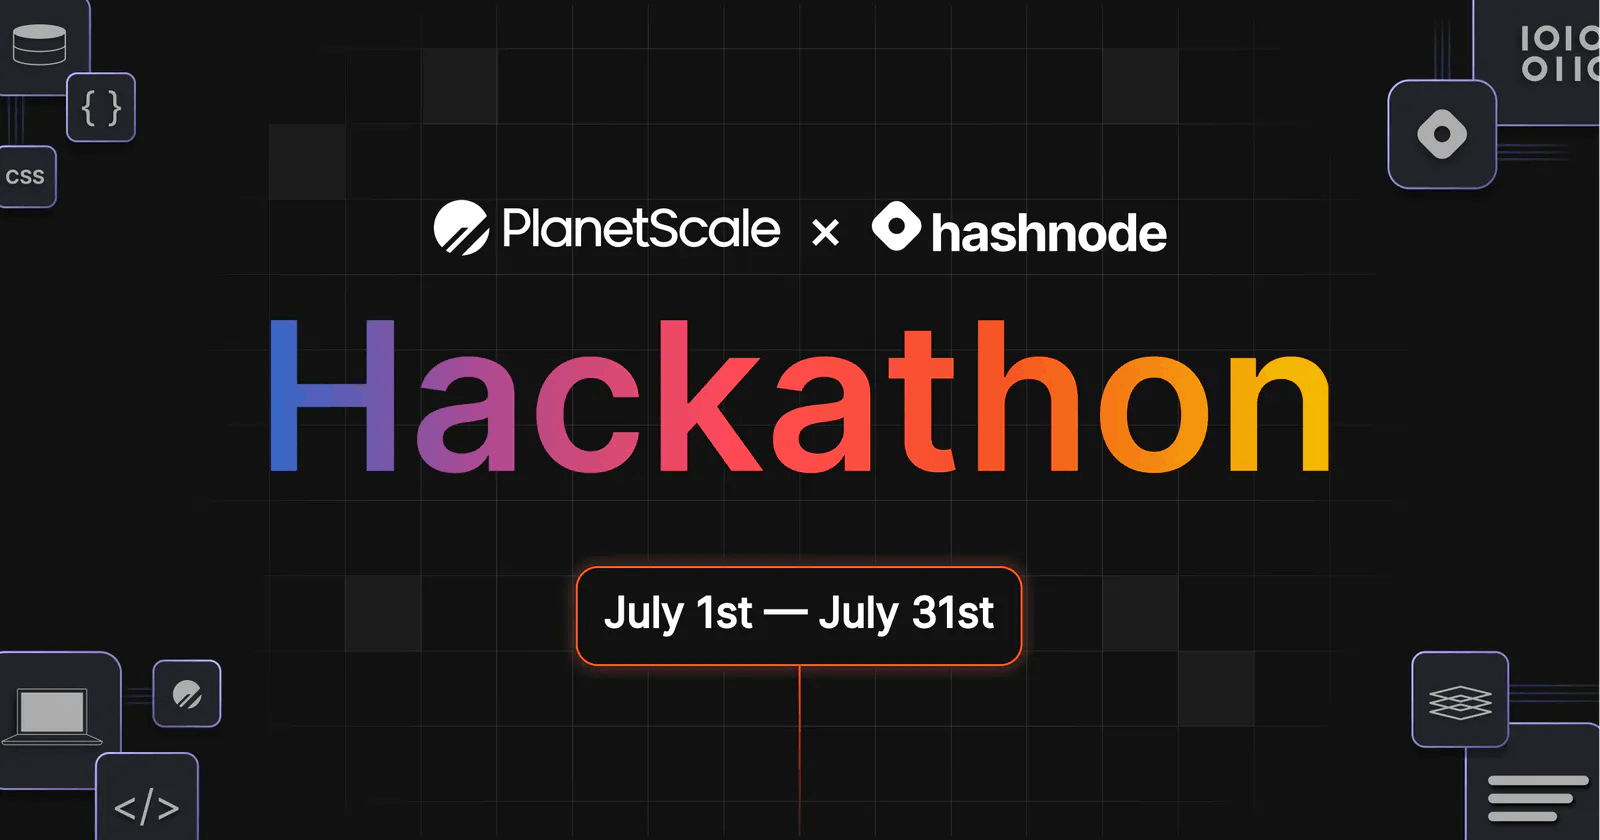 Localizard [3] - Final update - PlanetScale Hackathon